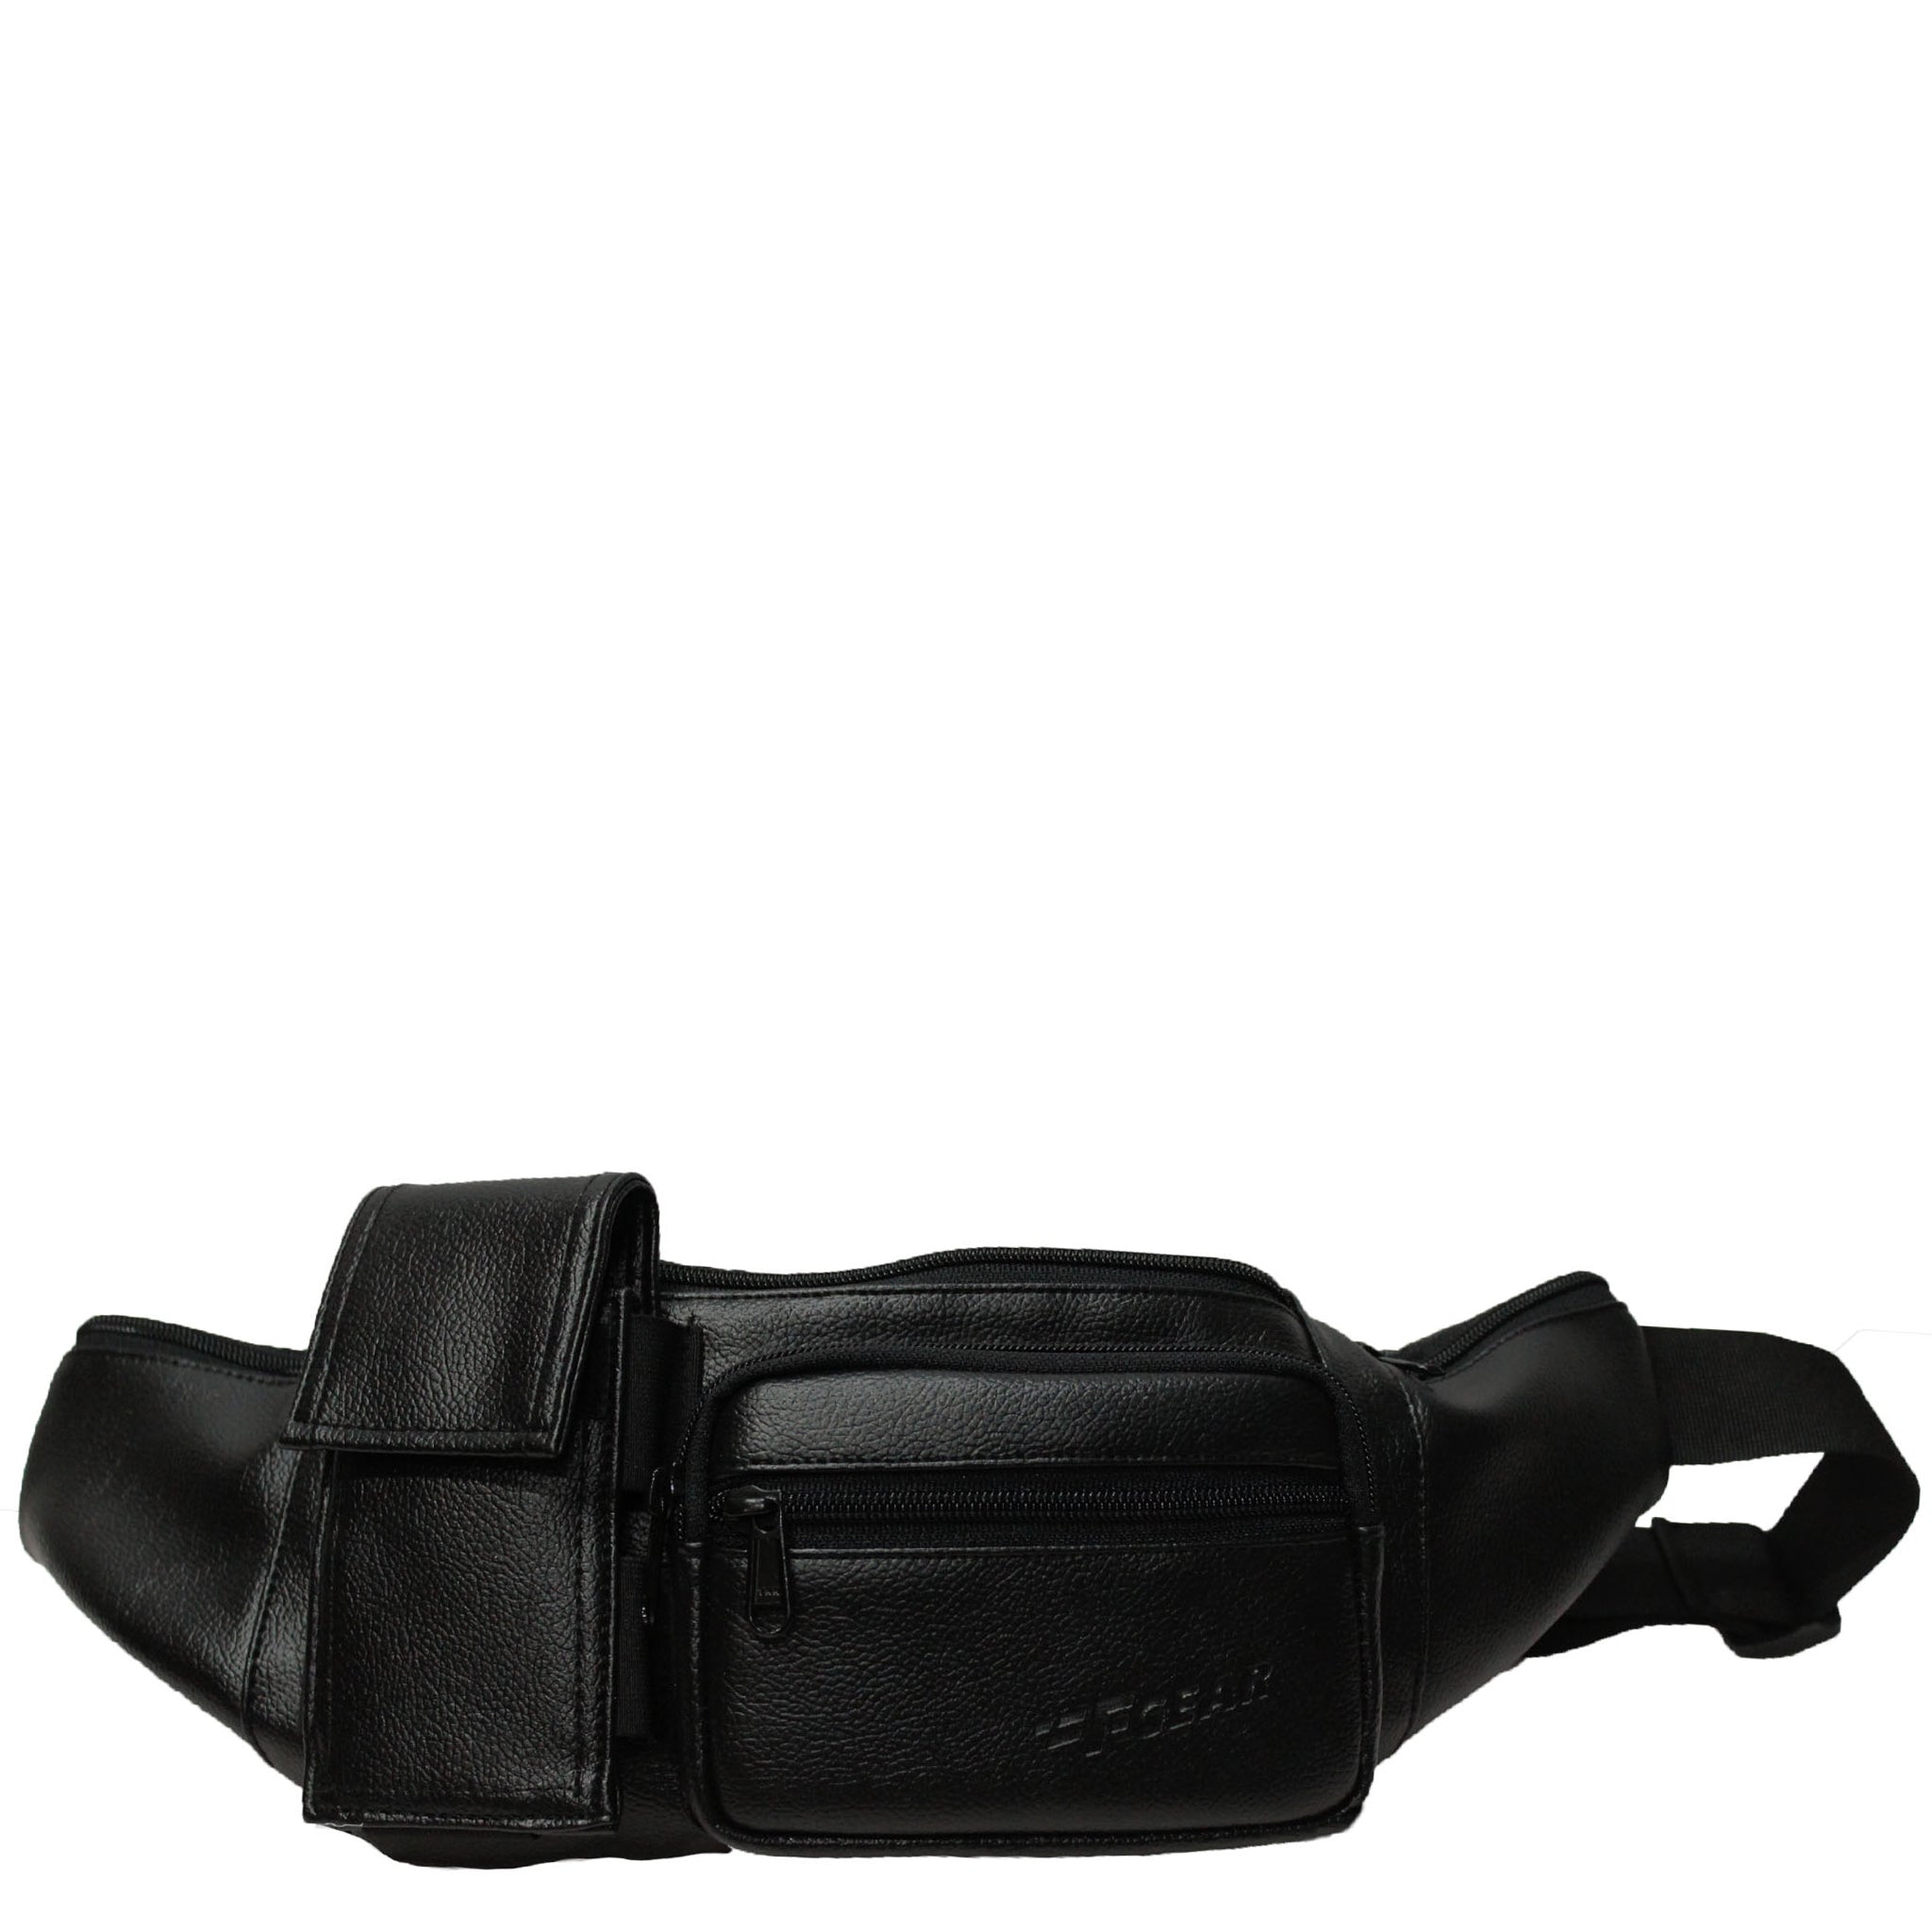 CLUCI Fanny Packs Crossbody Belt Bag Fashion Waist Bag with Adjustable